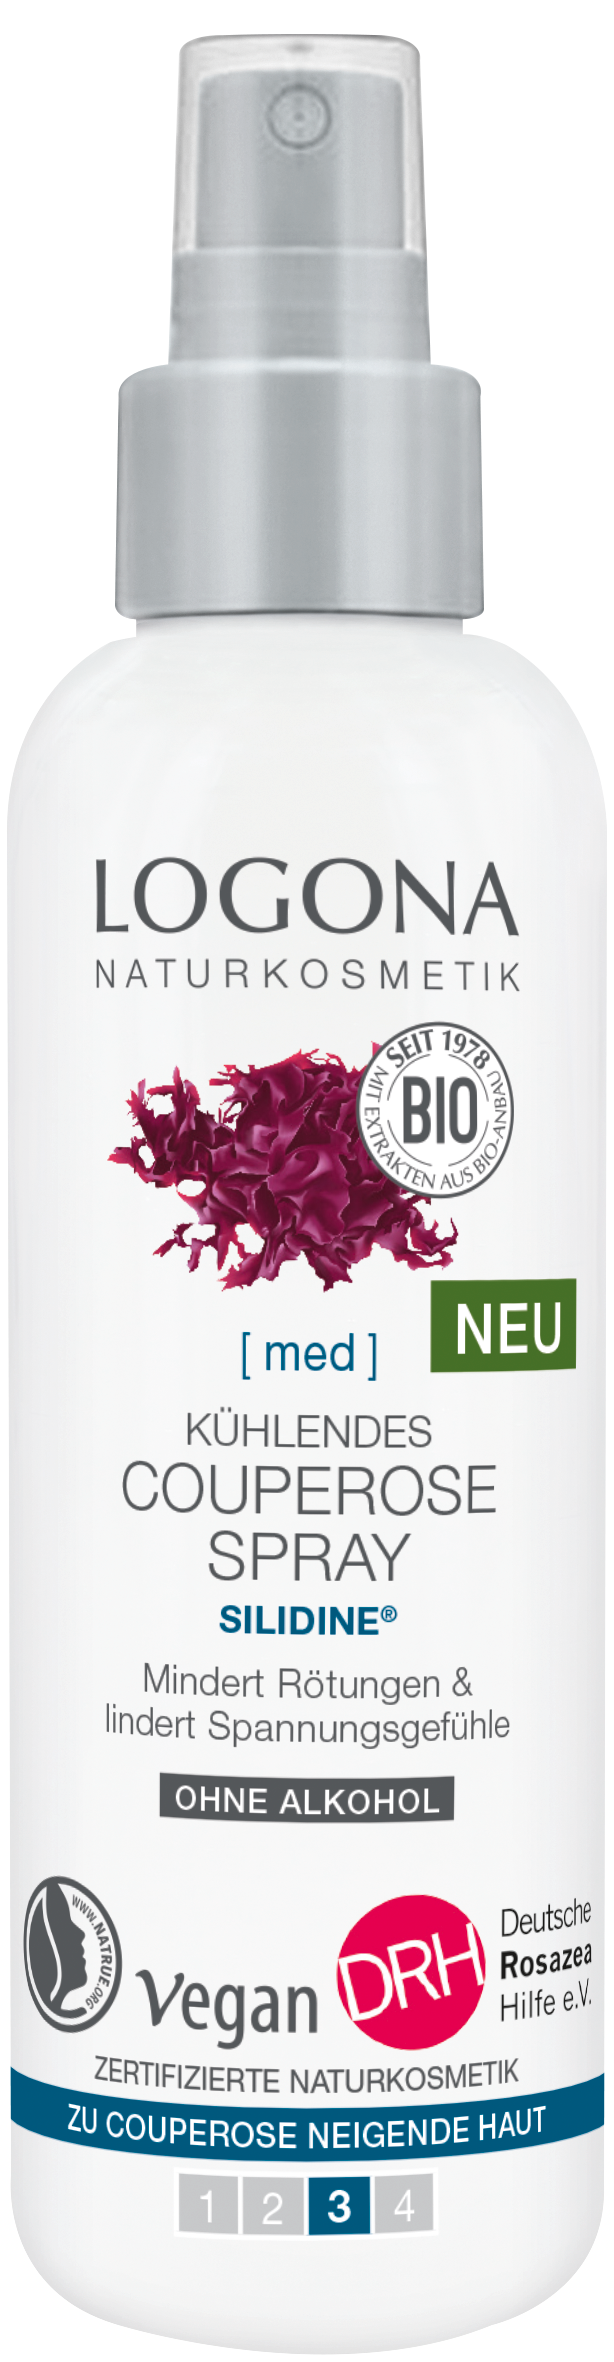 Logona Kühlendes Couperose Spray SILIDINE® 125 ml | NATRACTIV Bio  Naturkosmetik Onlineshop